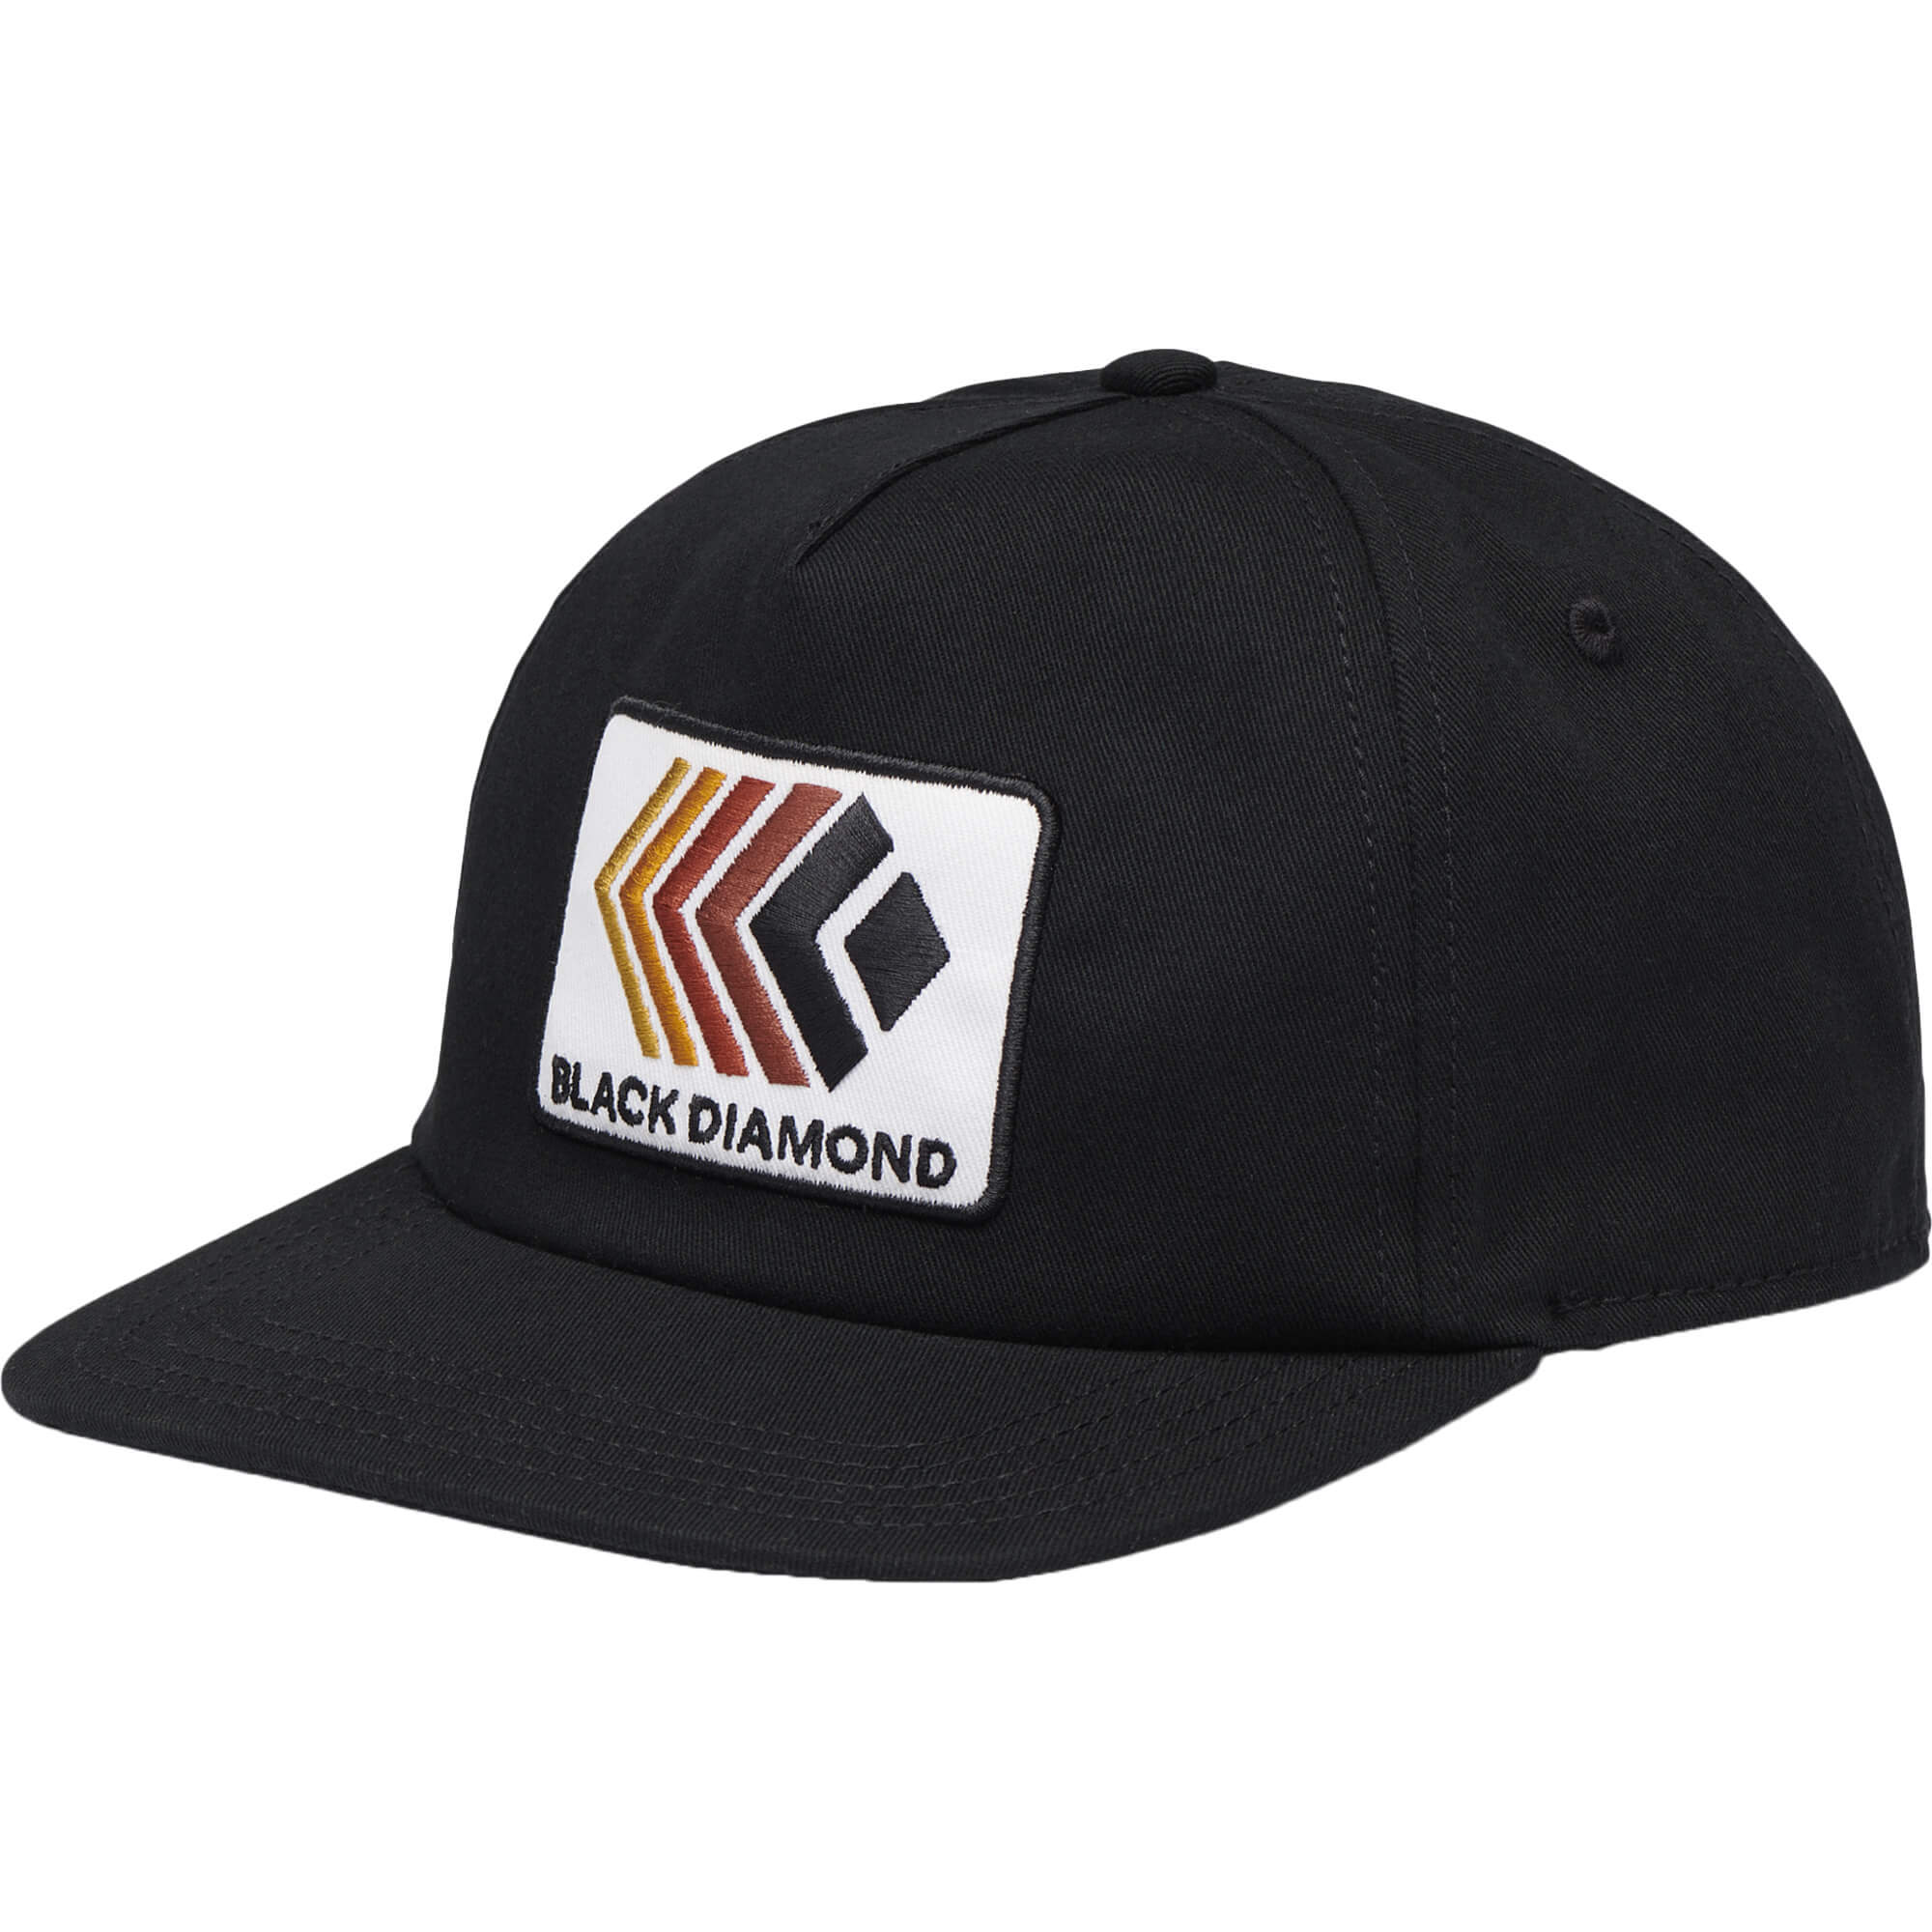 Black Diamond BD Washed Cap Flat Brim Cotton Hat